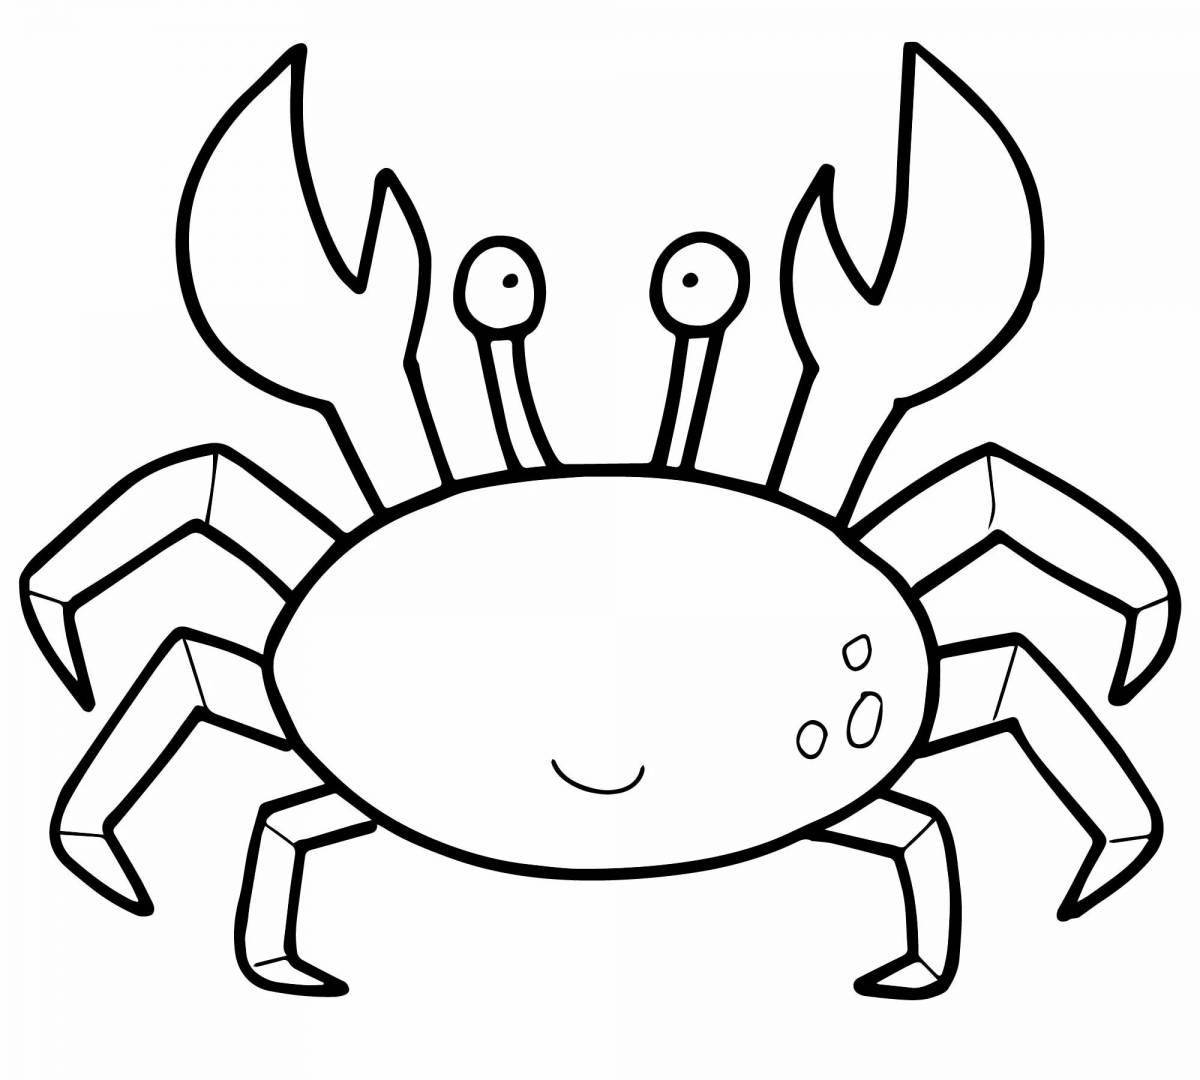 Adorable crab captain coloring page